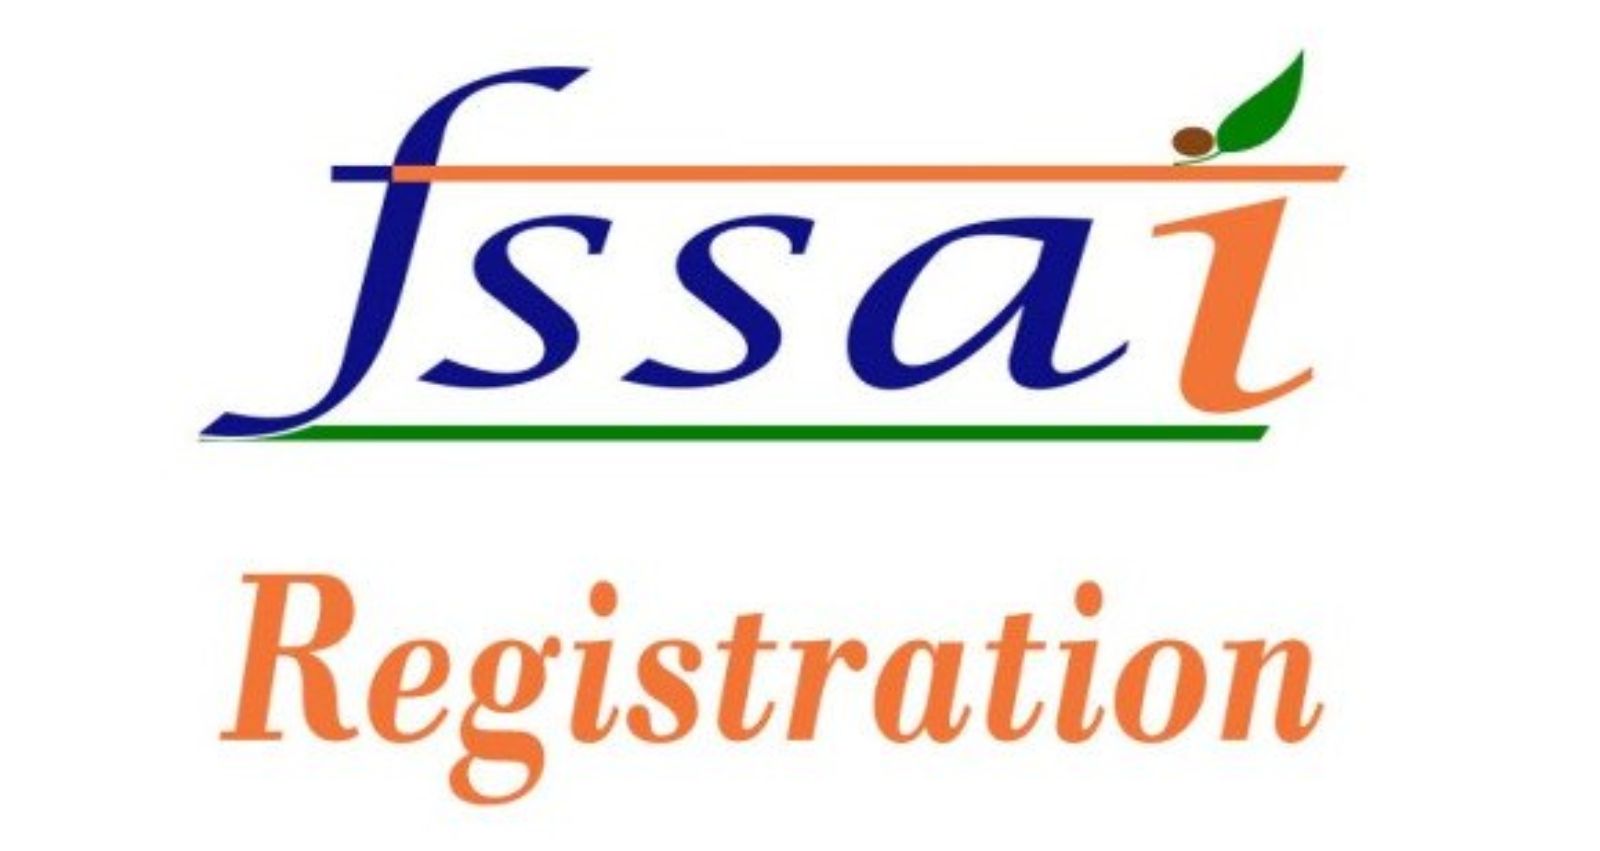 FSSAI Registration/License